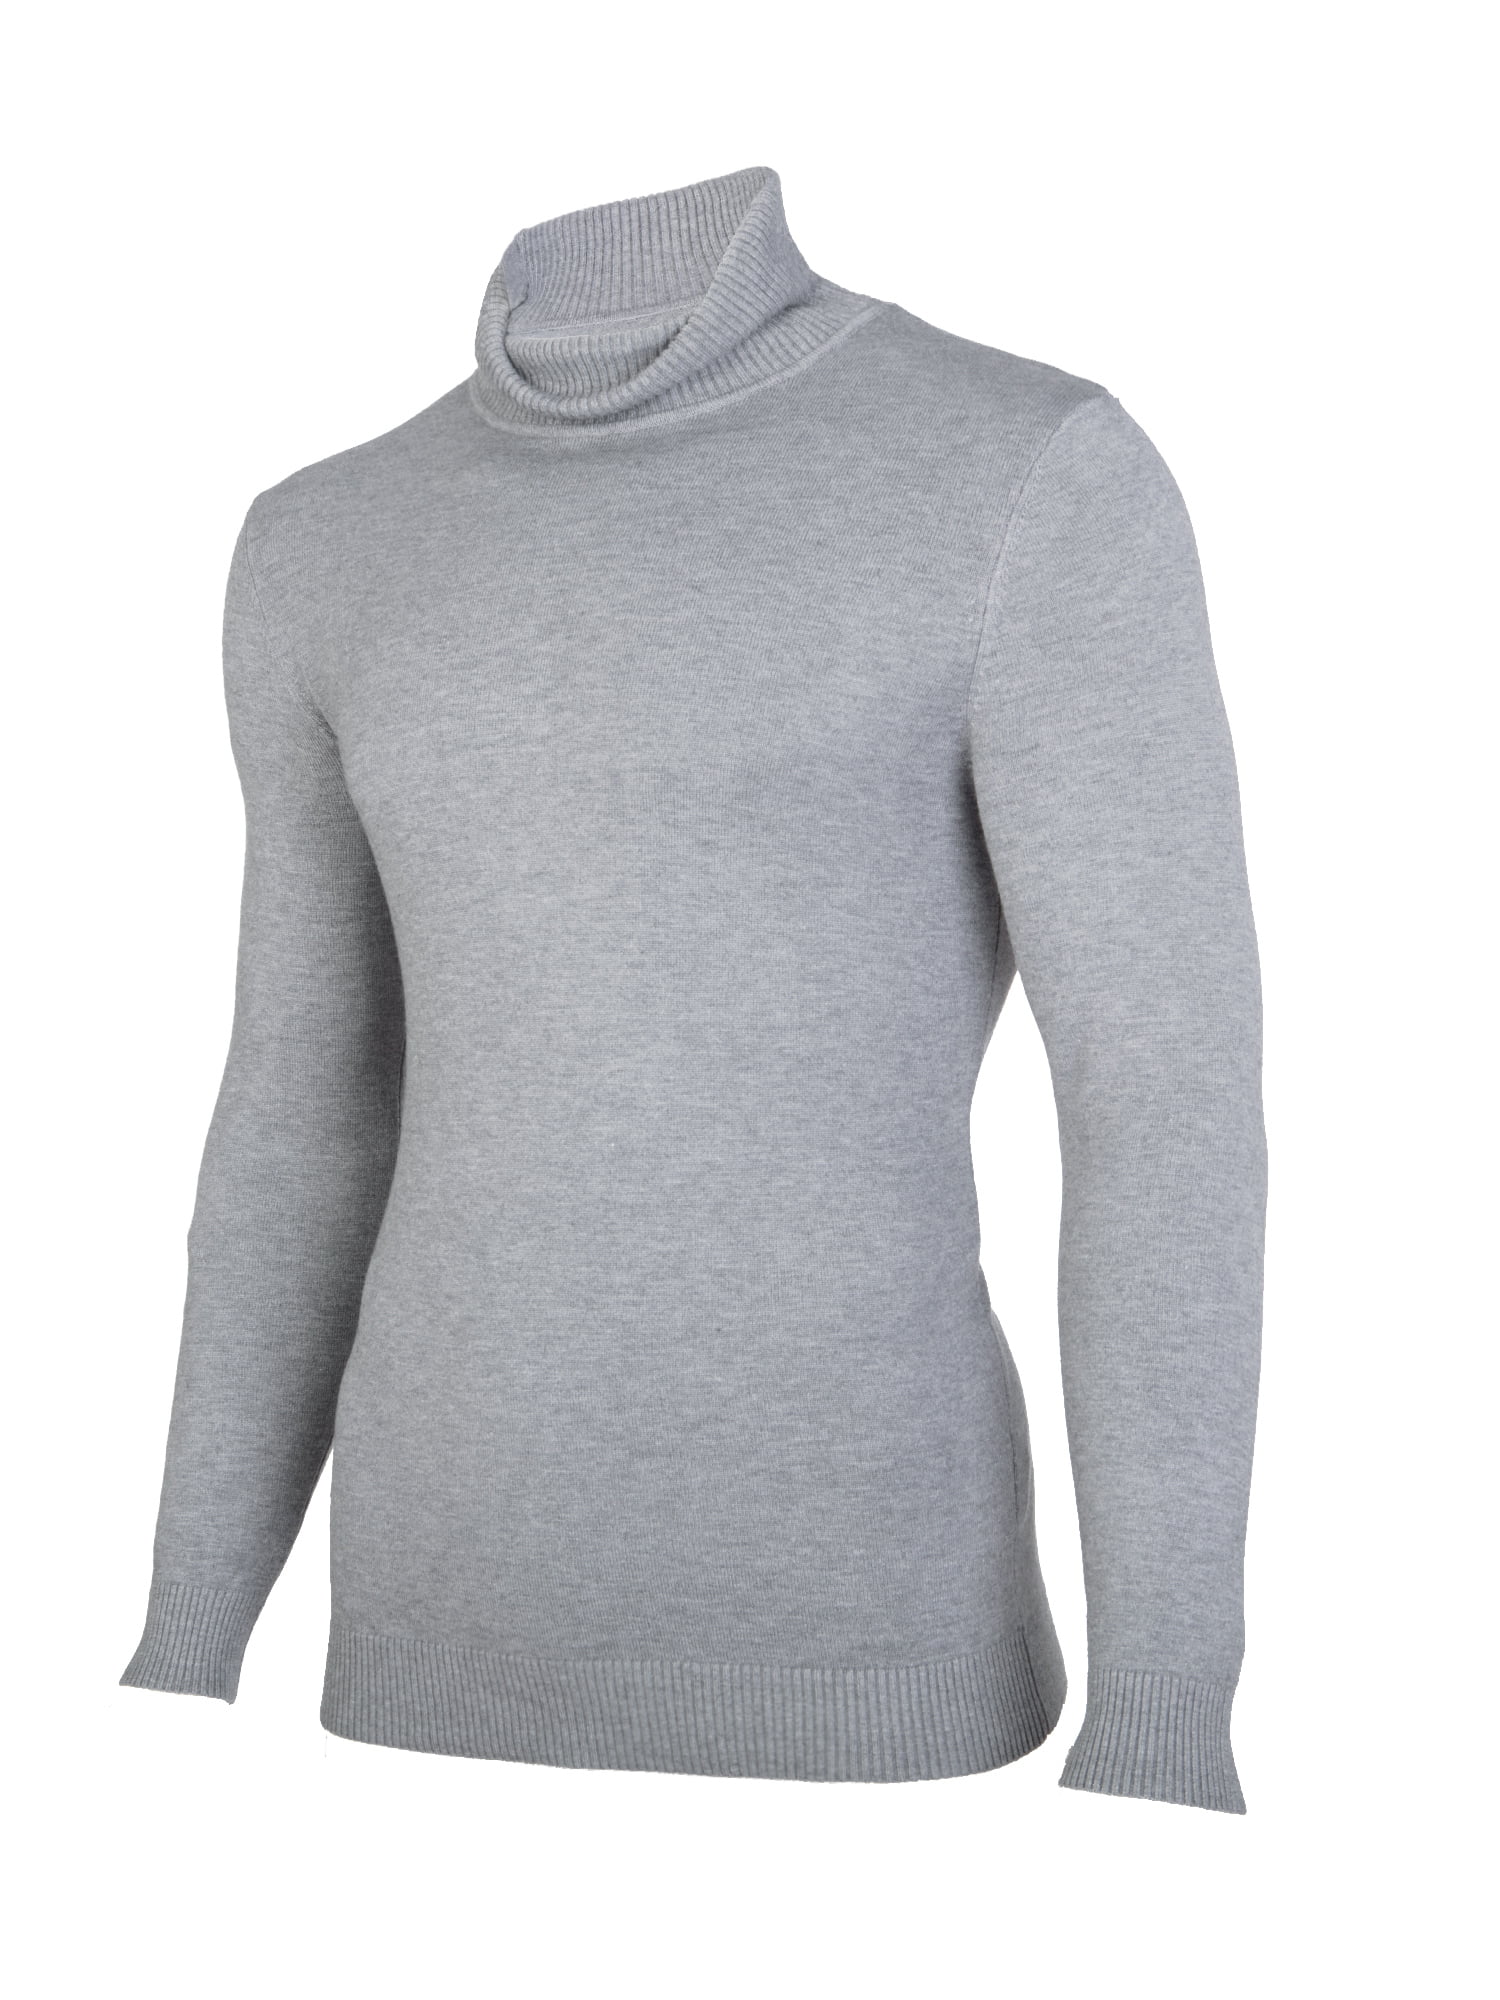 Gafeng Mens Turtleneck Pullover Sweater Slim Fit Light Winter Thermal Workout Plain Base Sweater